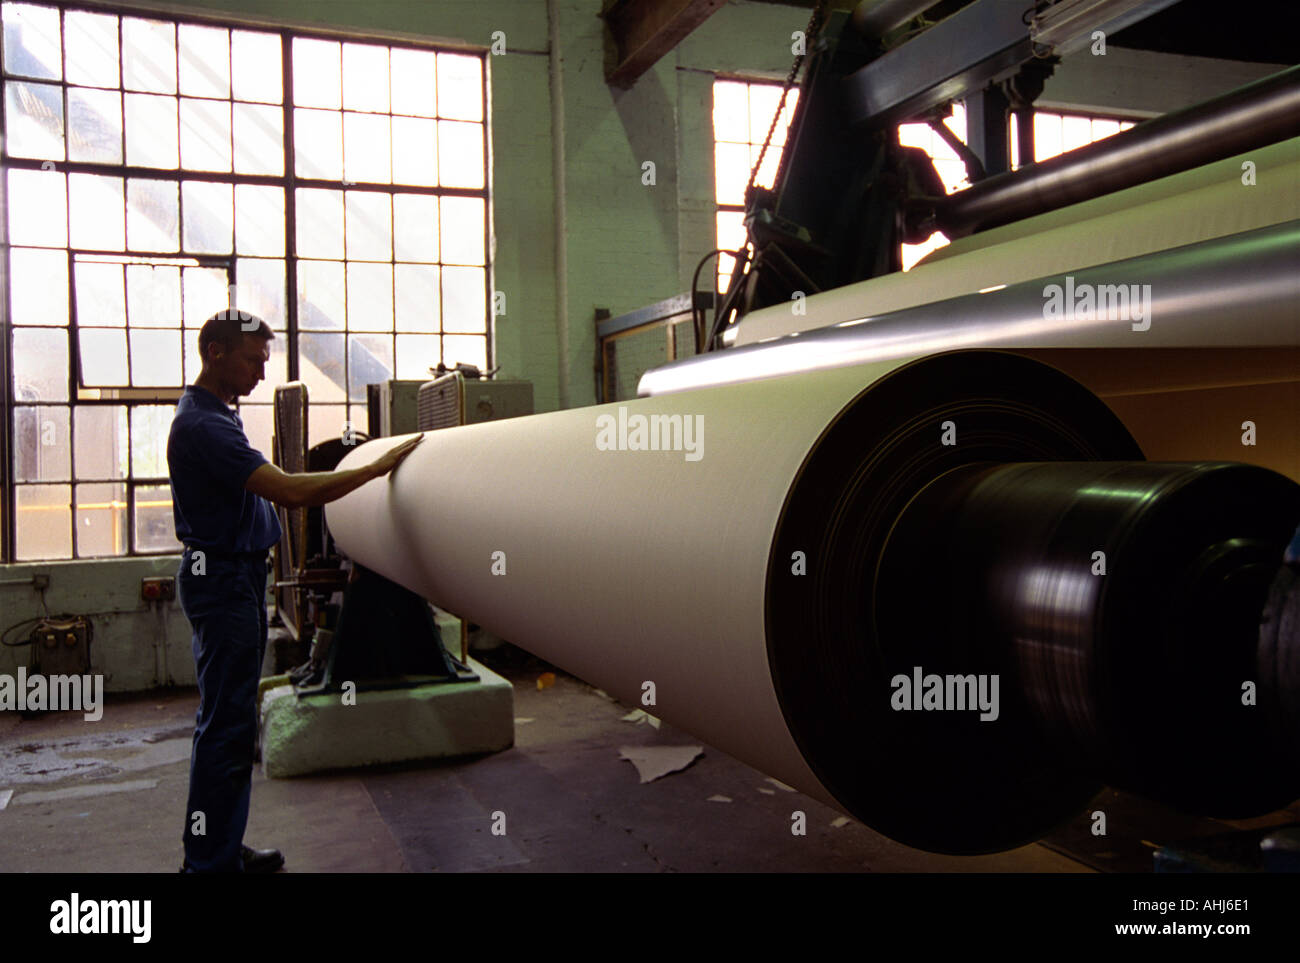 Rolls of paper passing through machines Smurfit paper factory, Snodland, UK Stock Photo